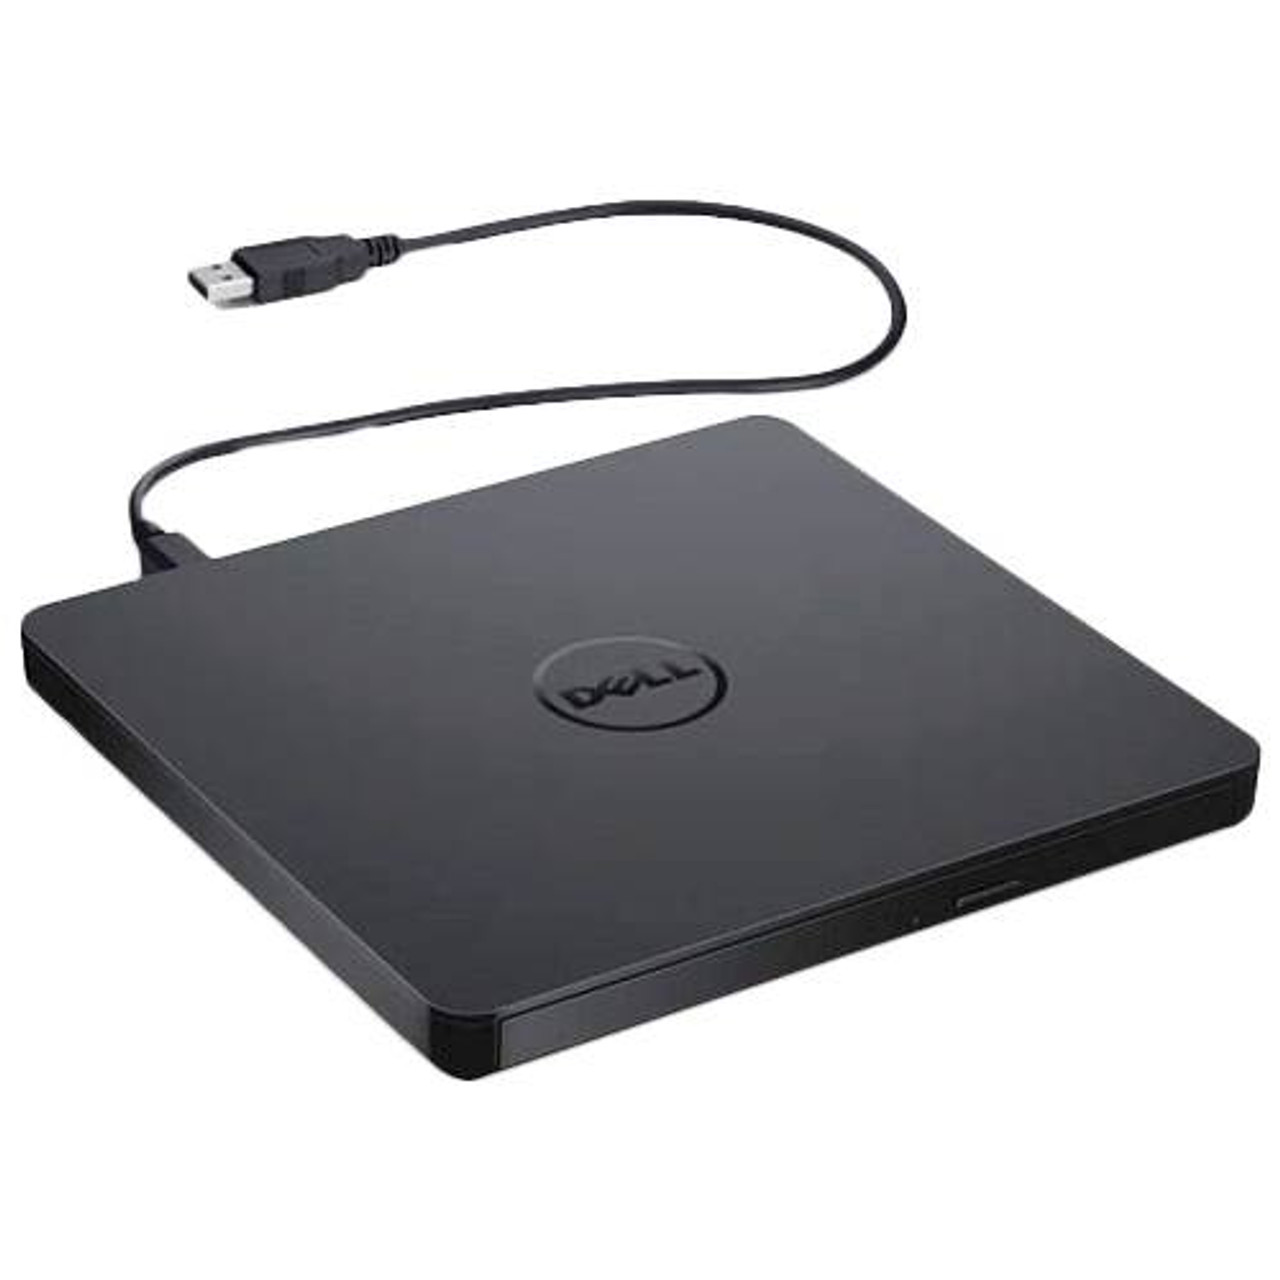 Dell - 8x External USB DVD±RW/CD-RW Drive - Black